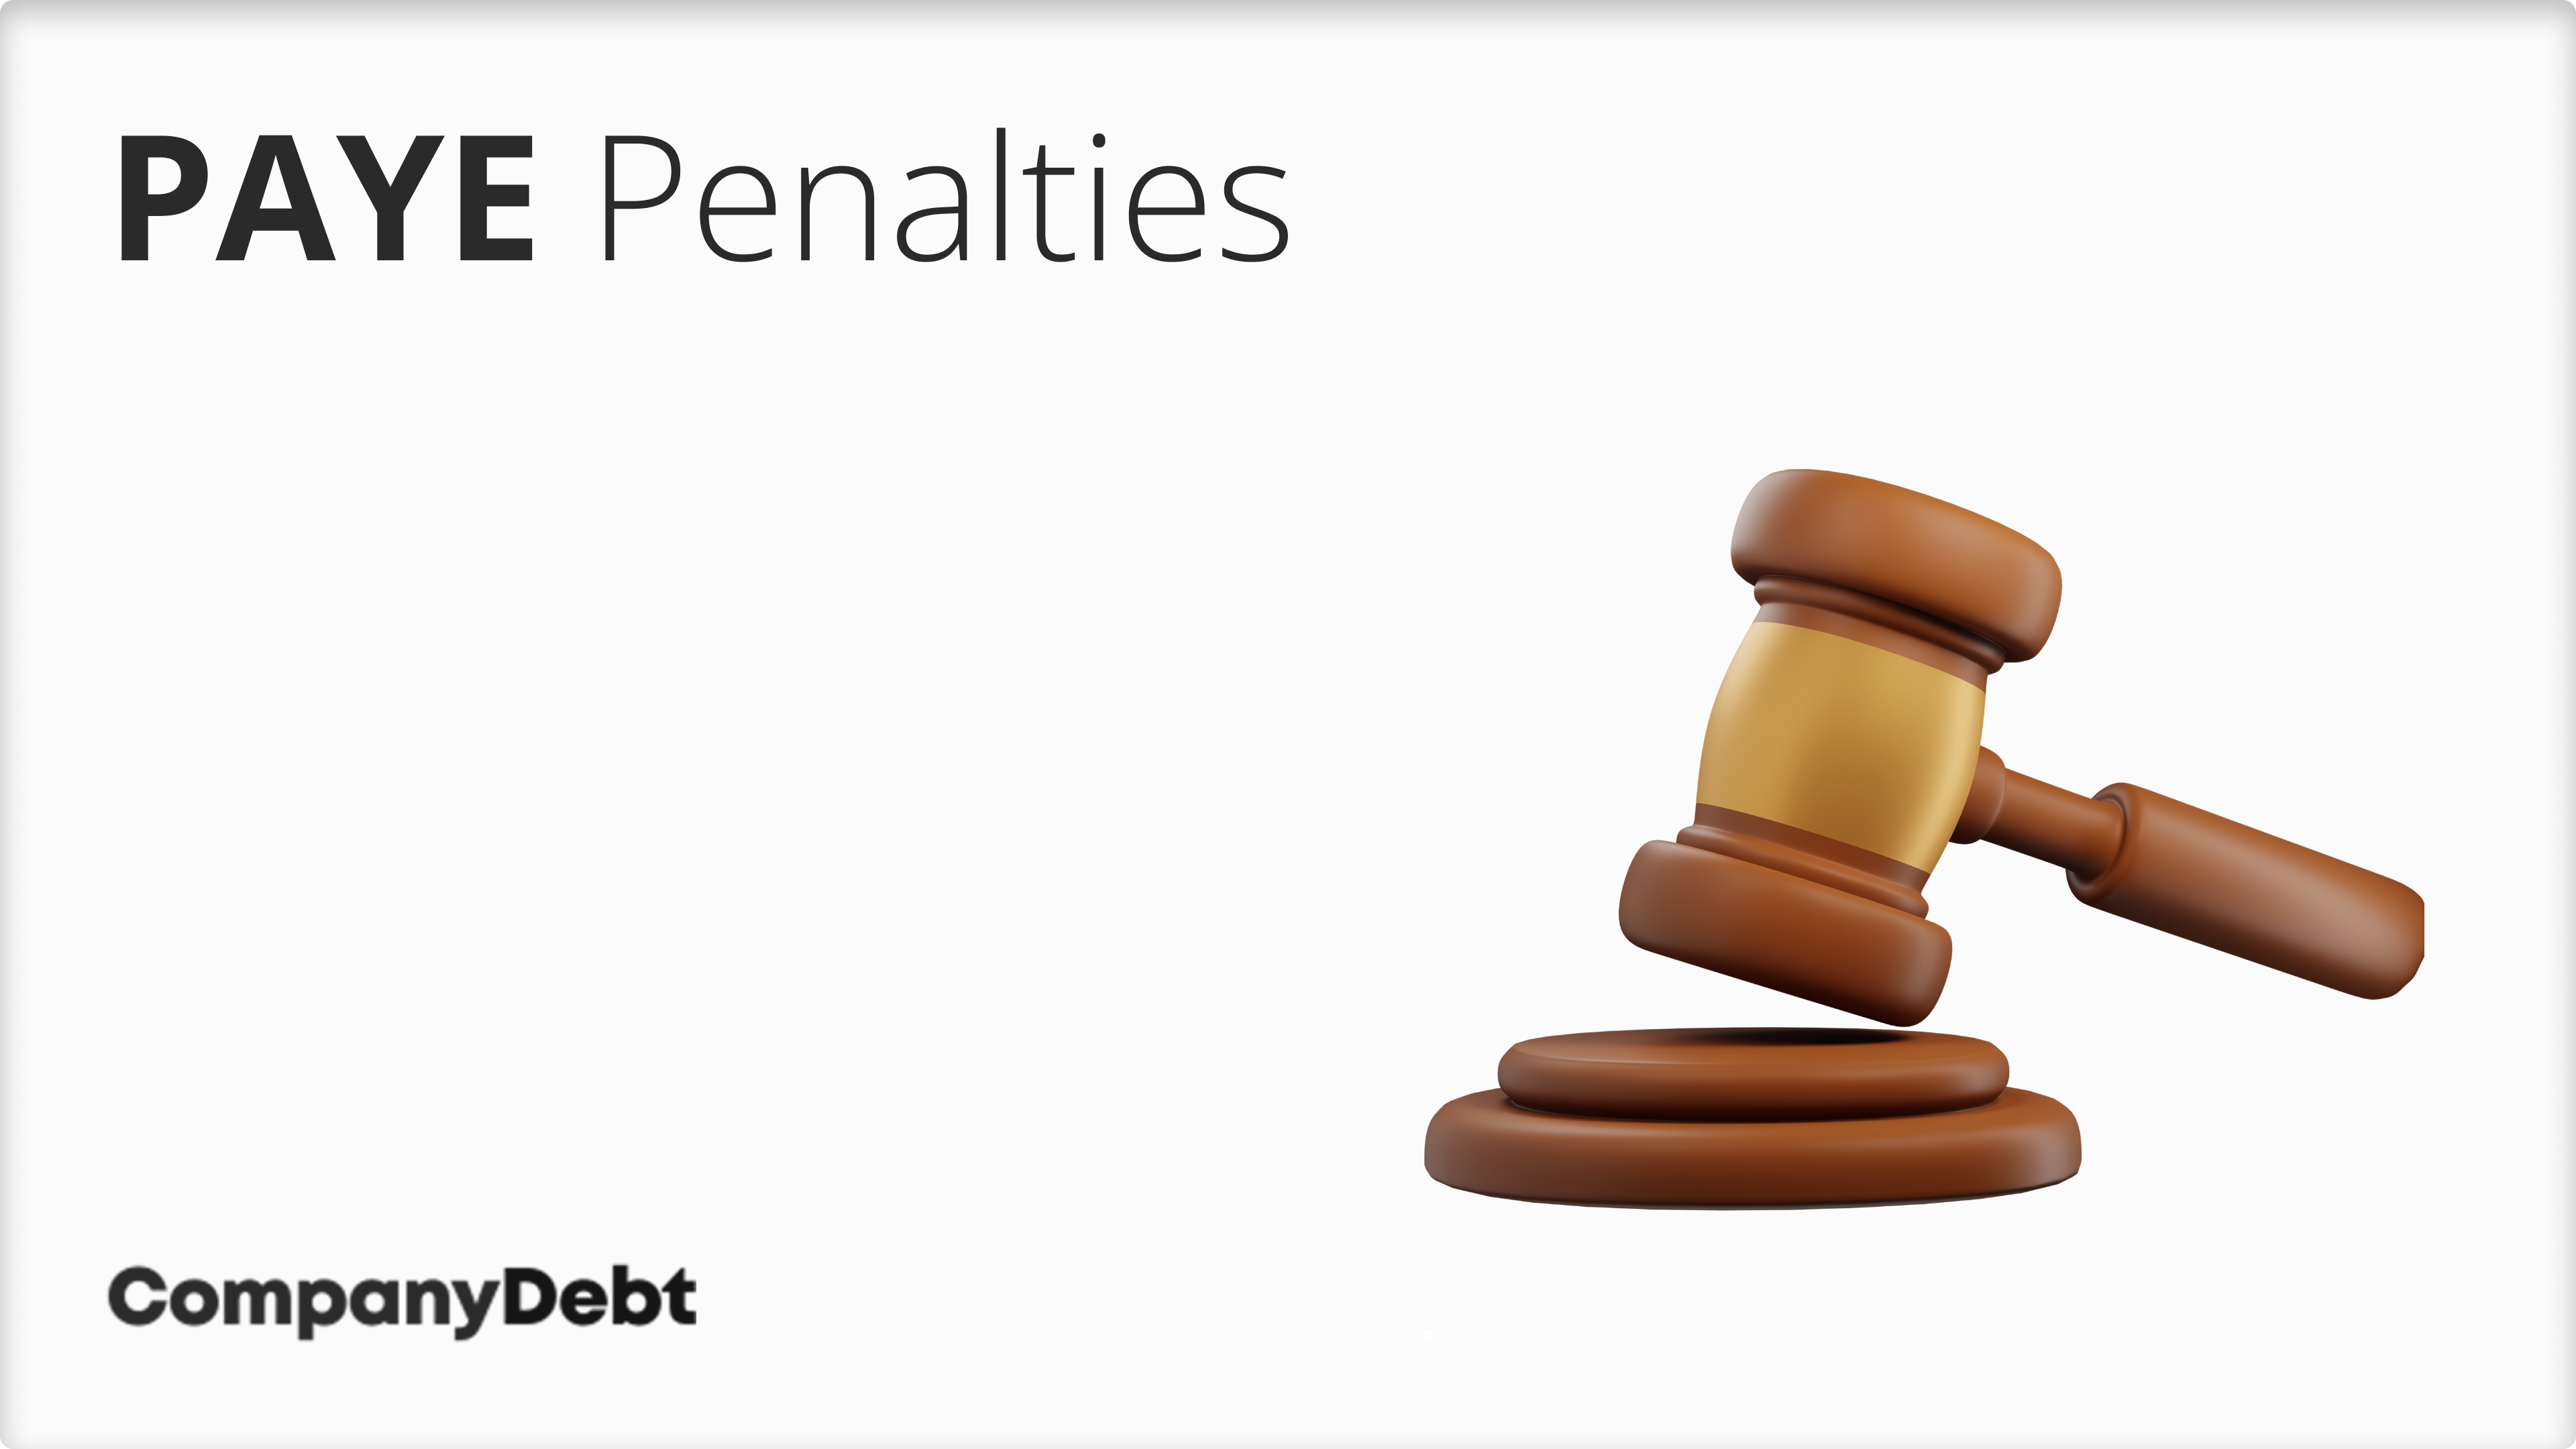 PAYE Penalties